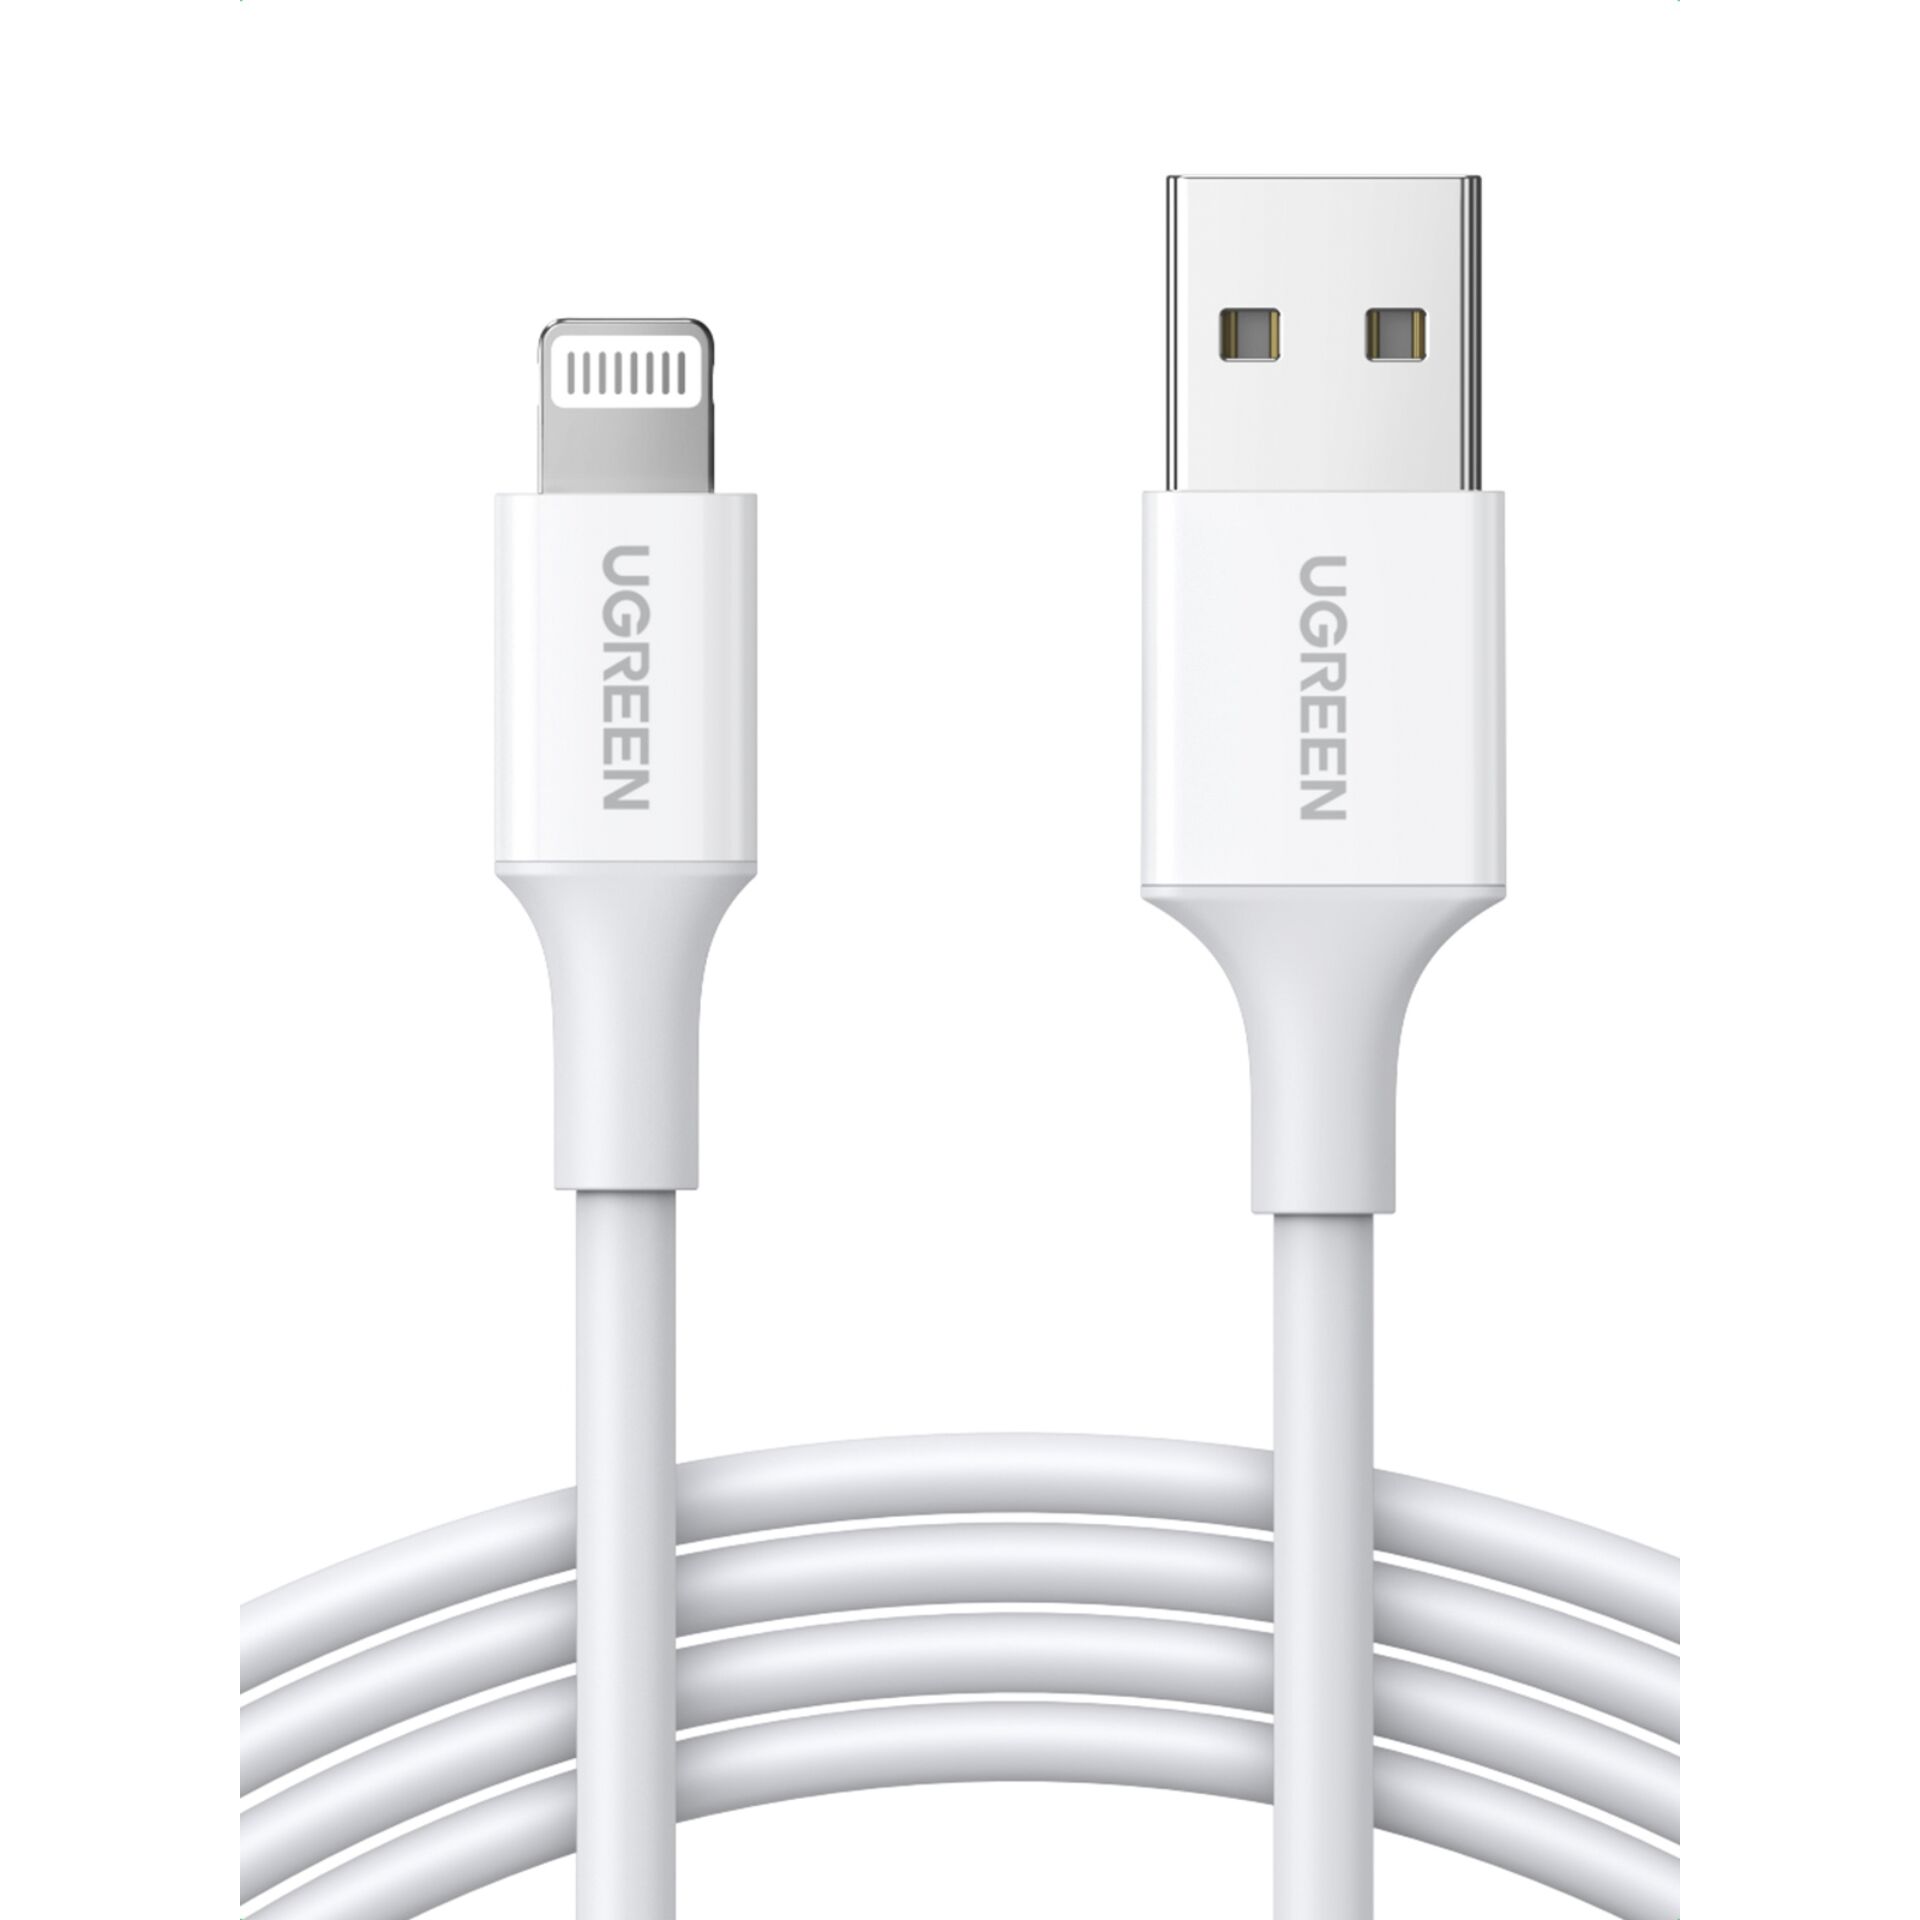 Ugreen cable USB 2.0 A lightning 2m, 5V/2.4A iPhone 7 / 7plus / 6S/ 6 / 6 Plus, iPhone 5s/5c/5, iPad Mini/Mini 2, iPad 1 m Weiß